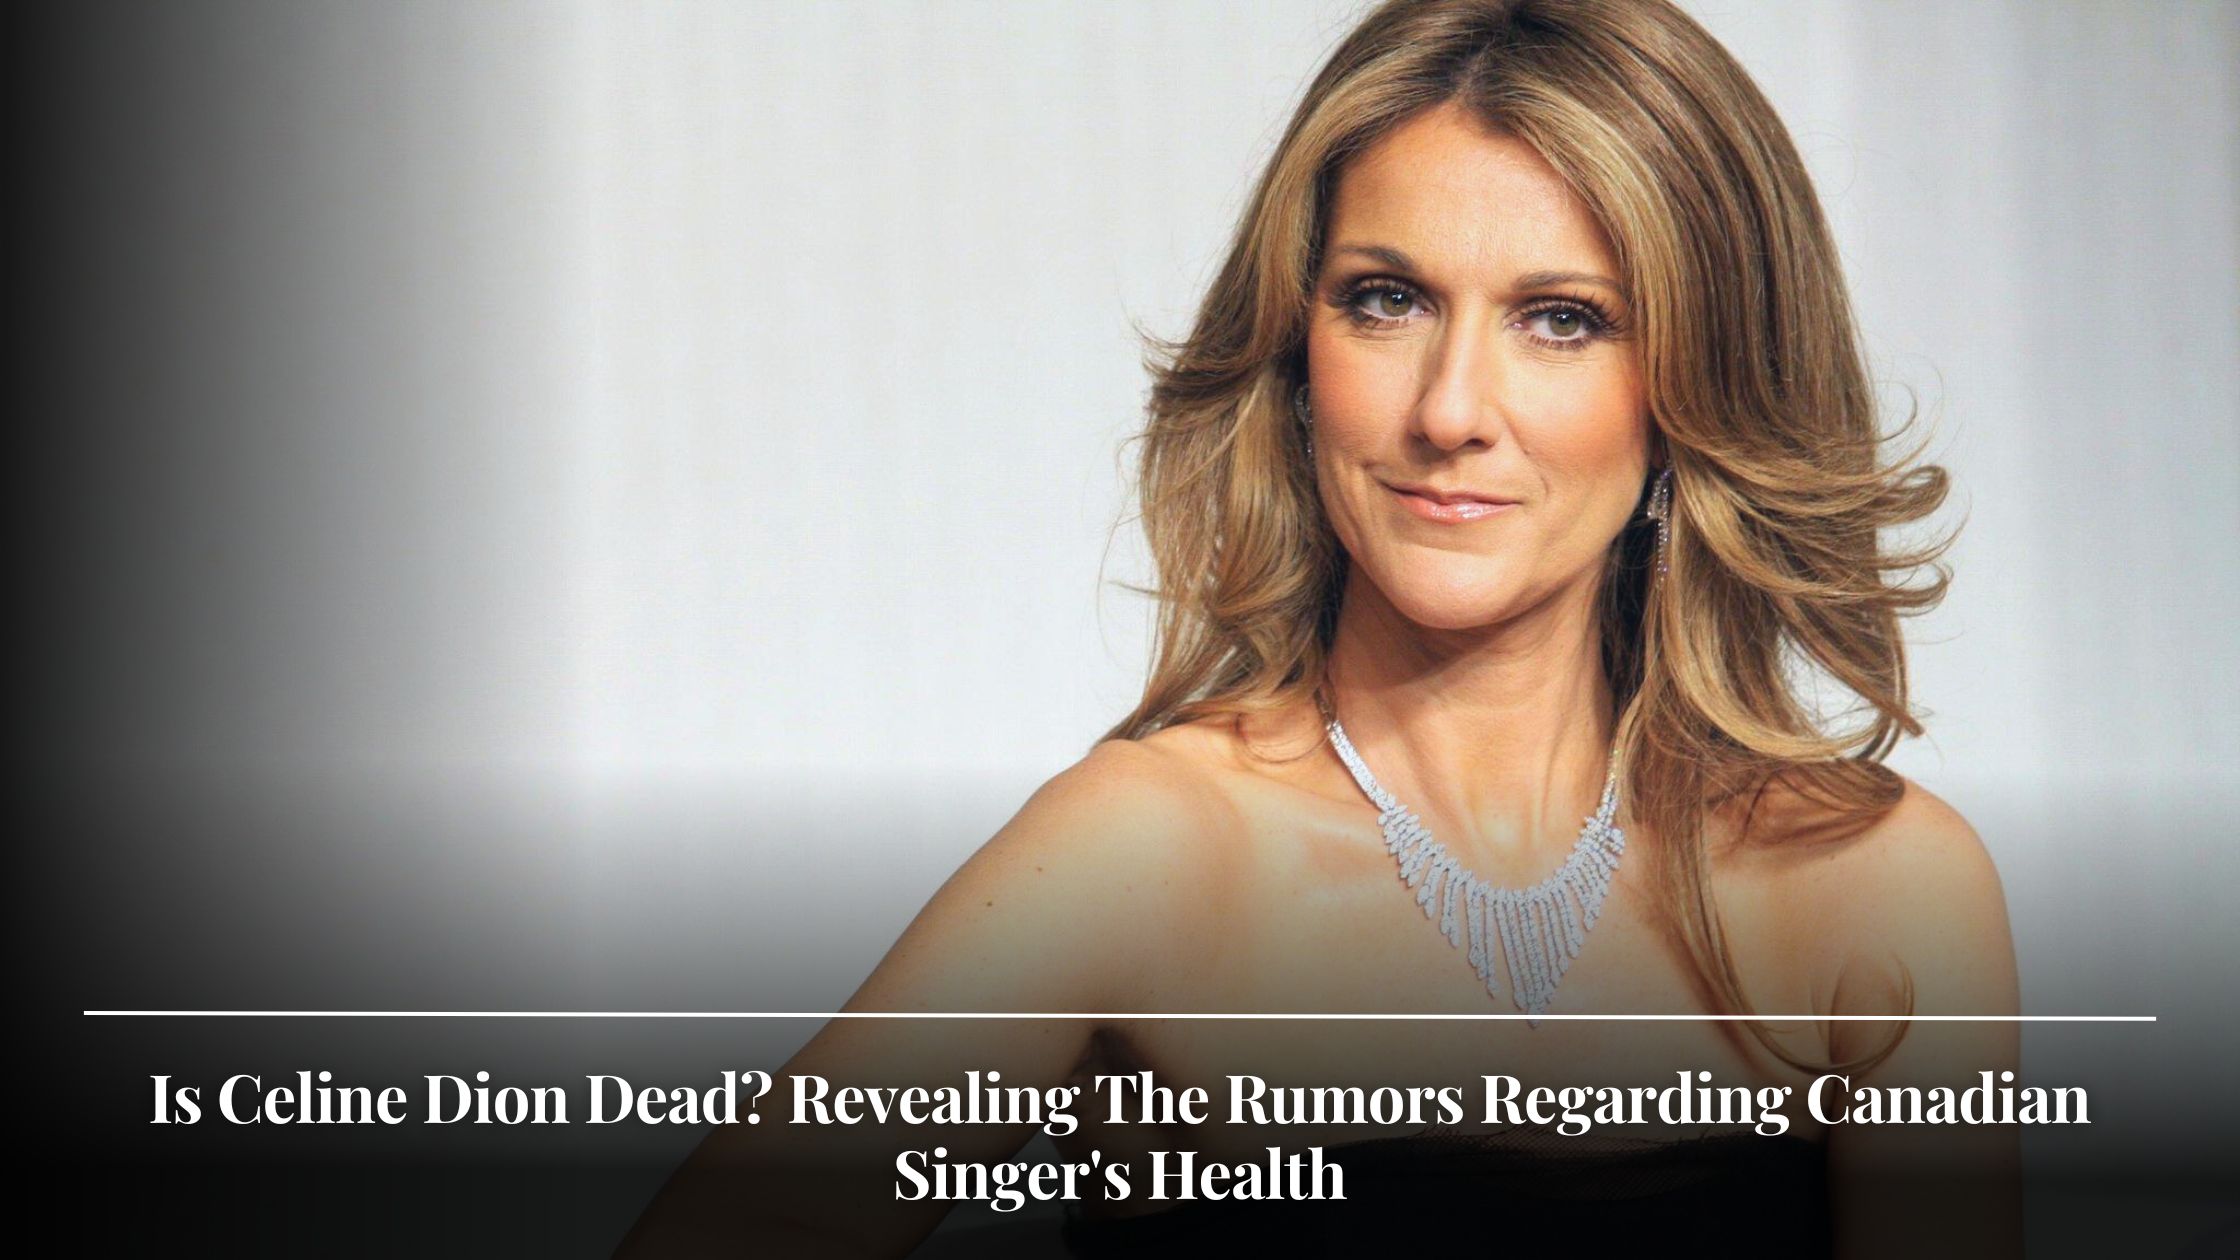 Is Celine Dion Dead Revealing The Rumors Regarding Canadian Singer's Health